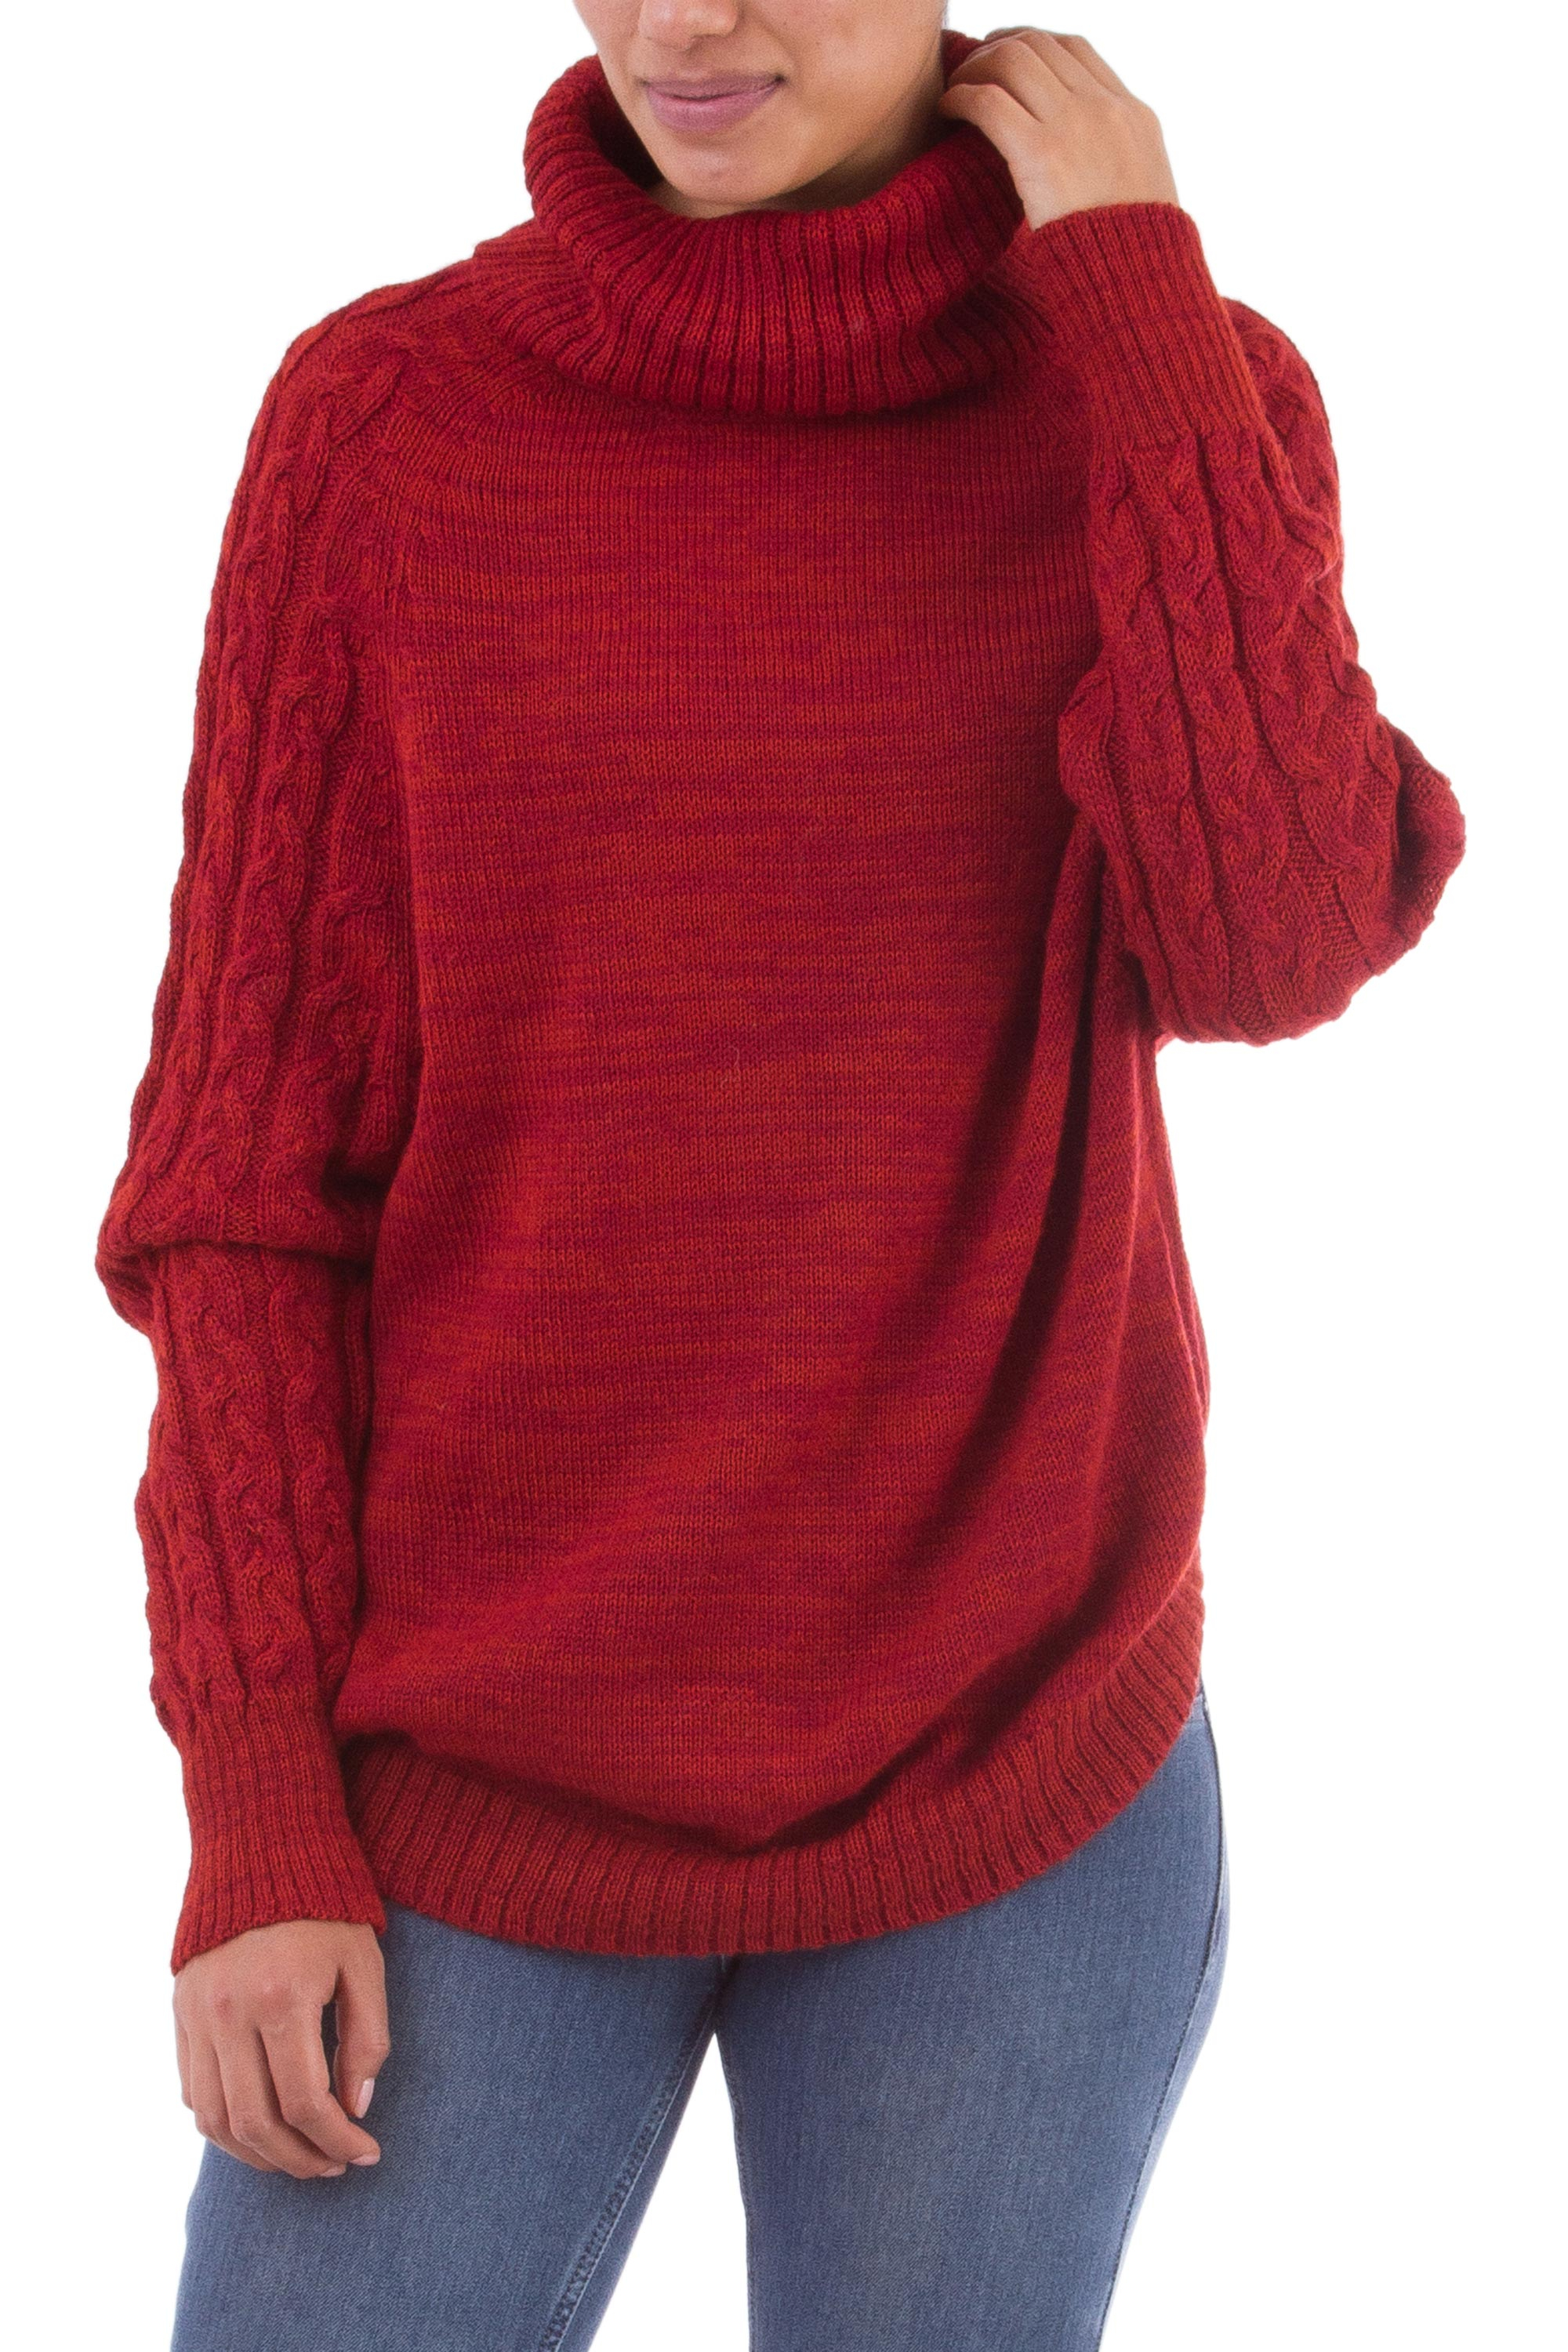 UNICEF Market | Knit Red Baby Alpaca Turtleneck Sweater from Peru ...